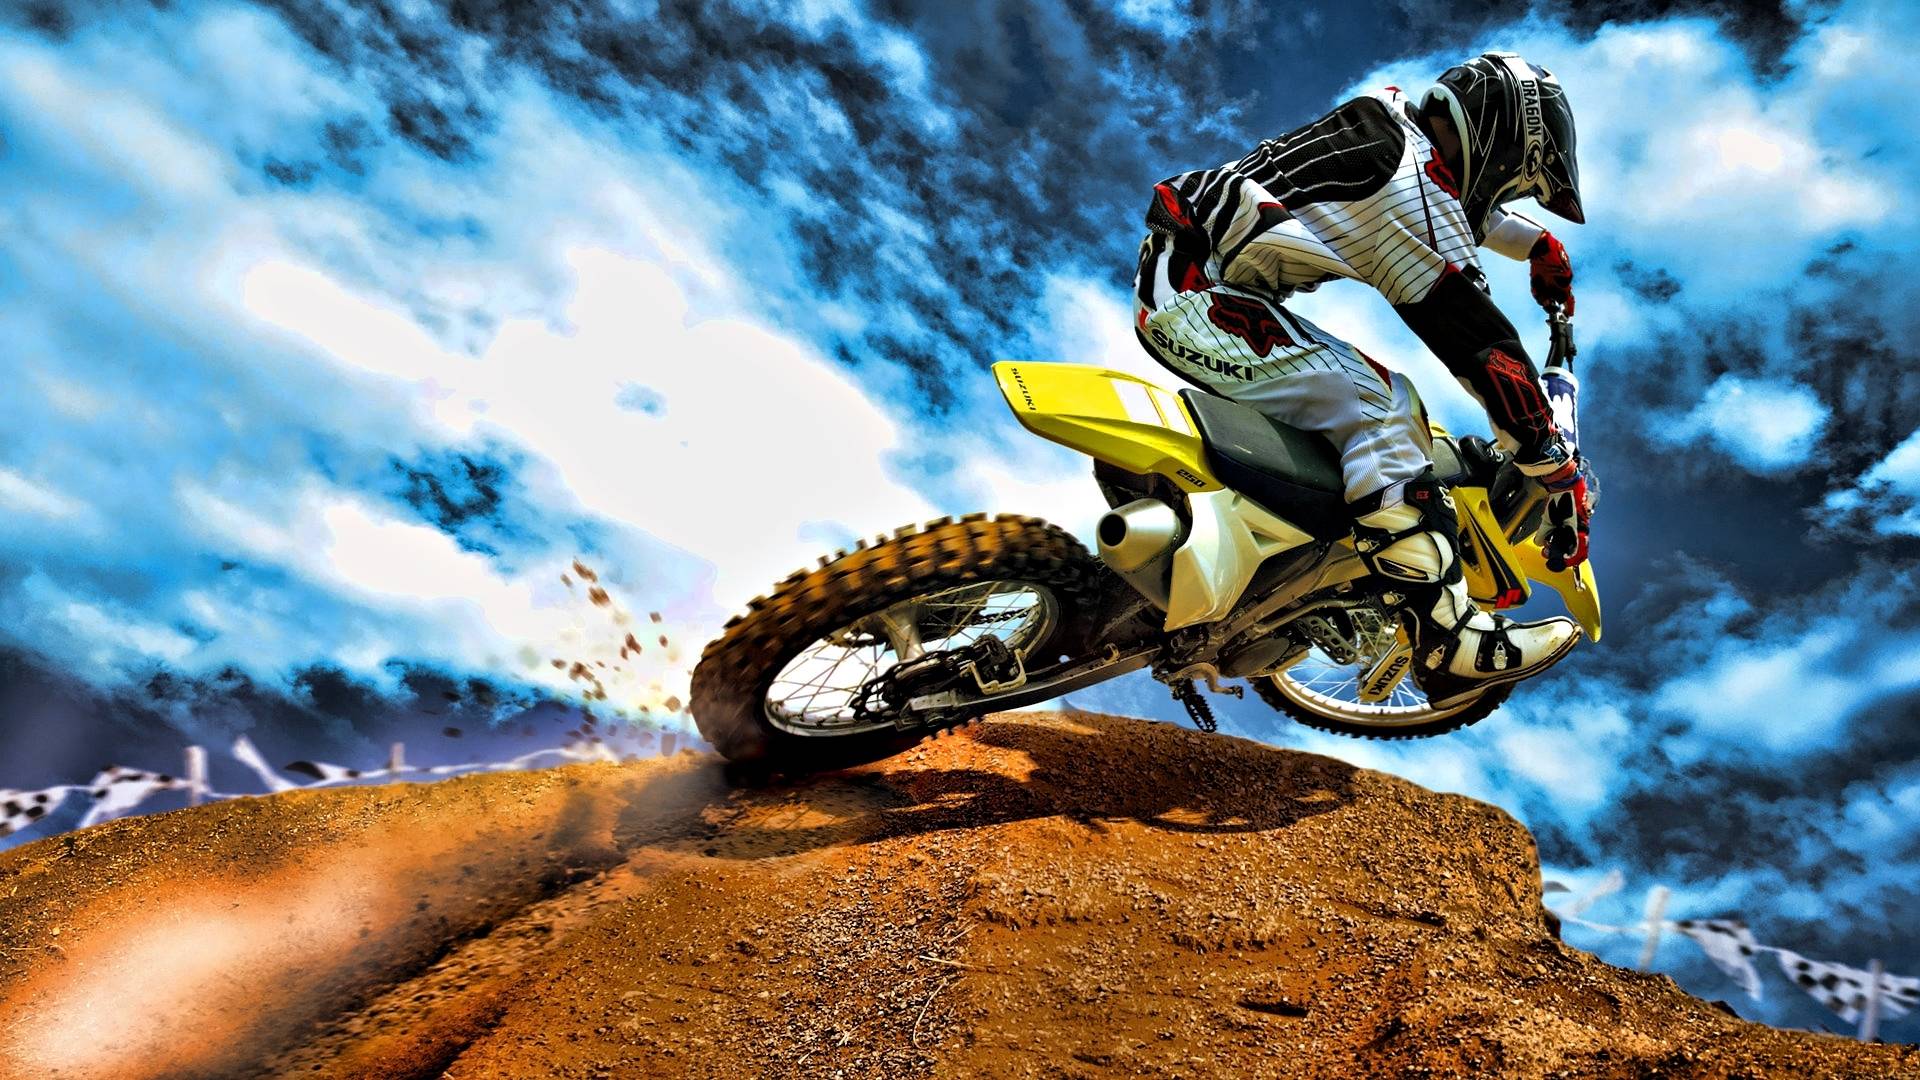 Motocross wallpaper HD free wallpaper background image